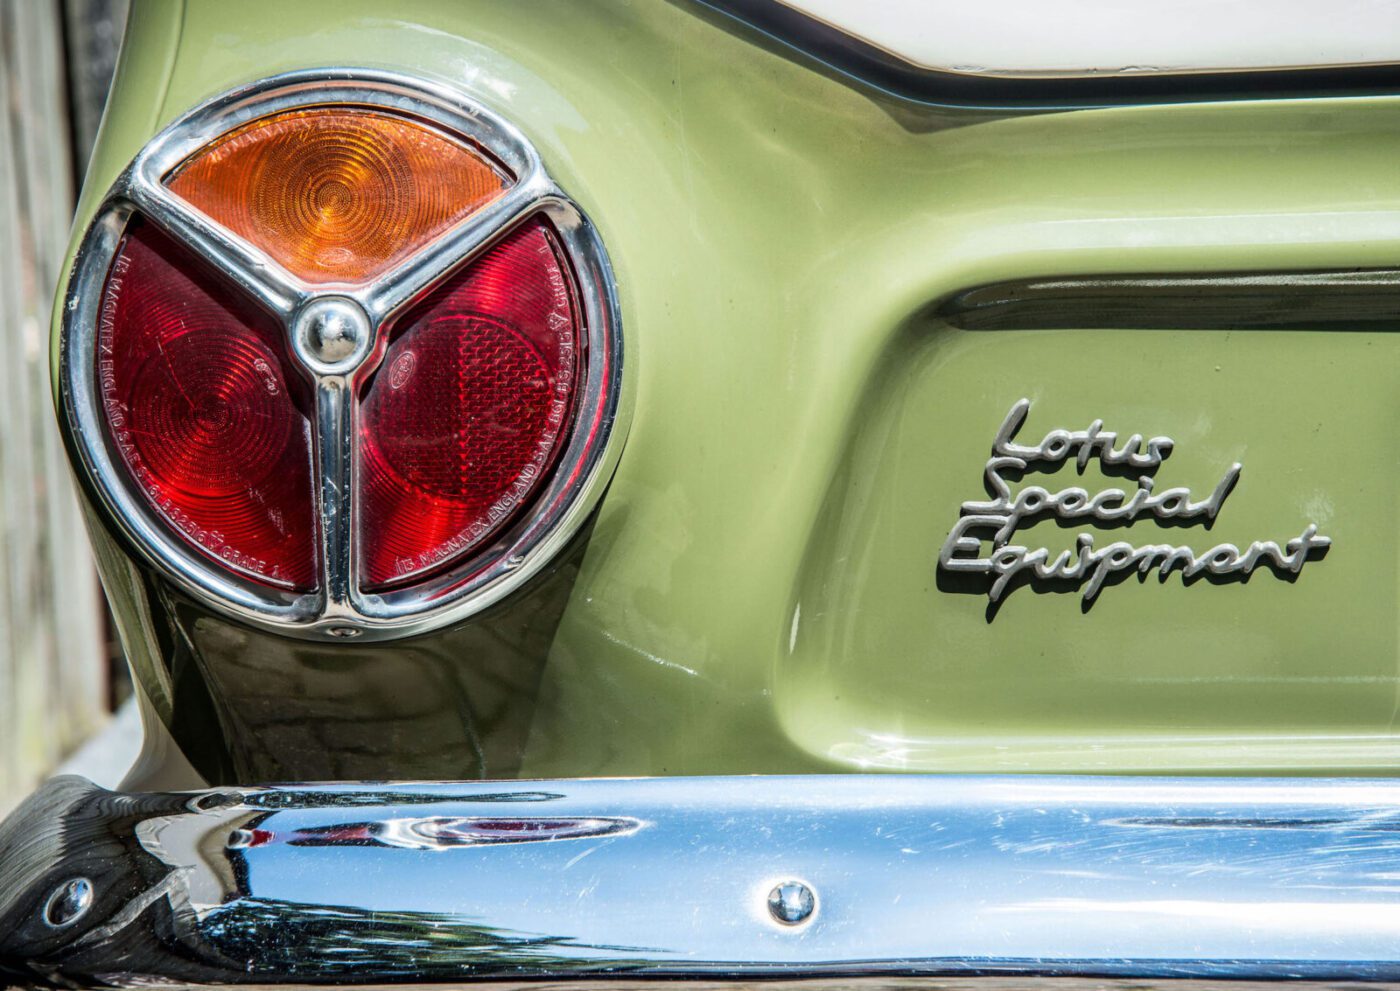 Lotus Cortina SE badge